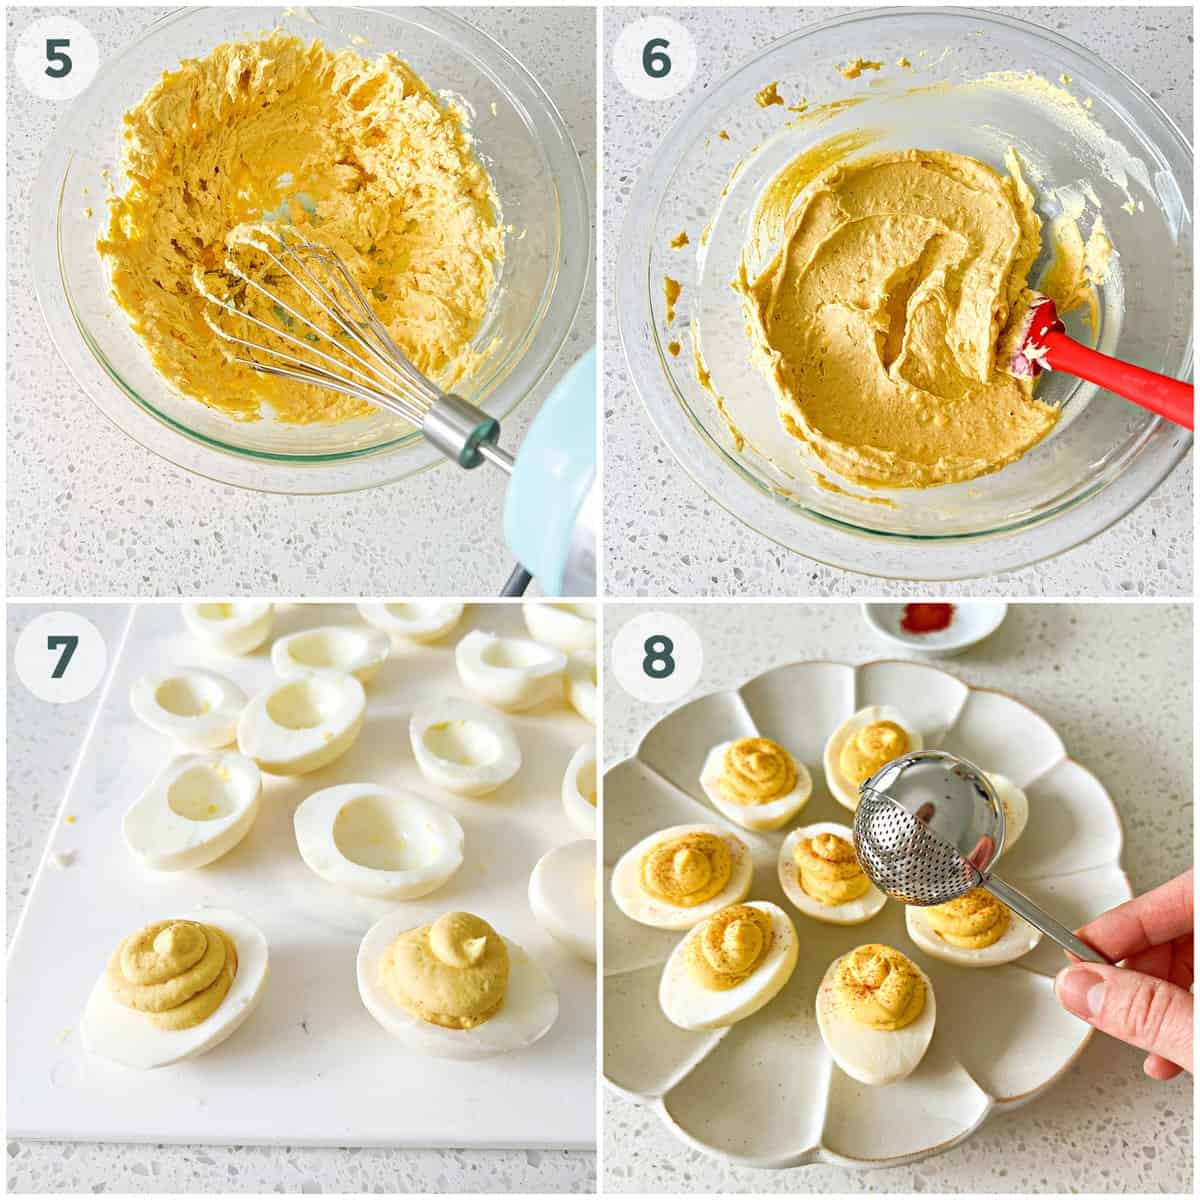 final four steps of preparing deviled eggs